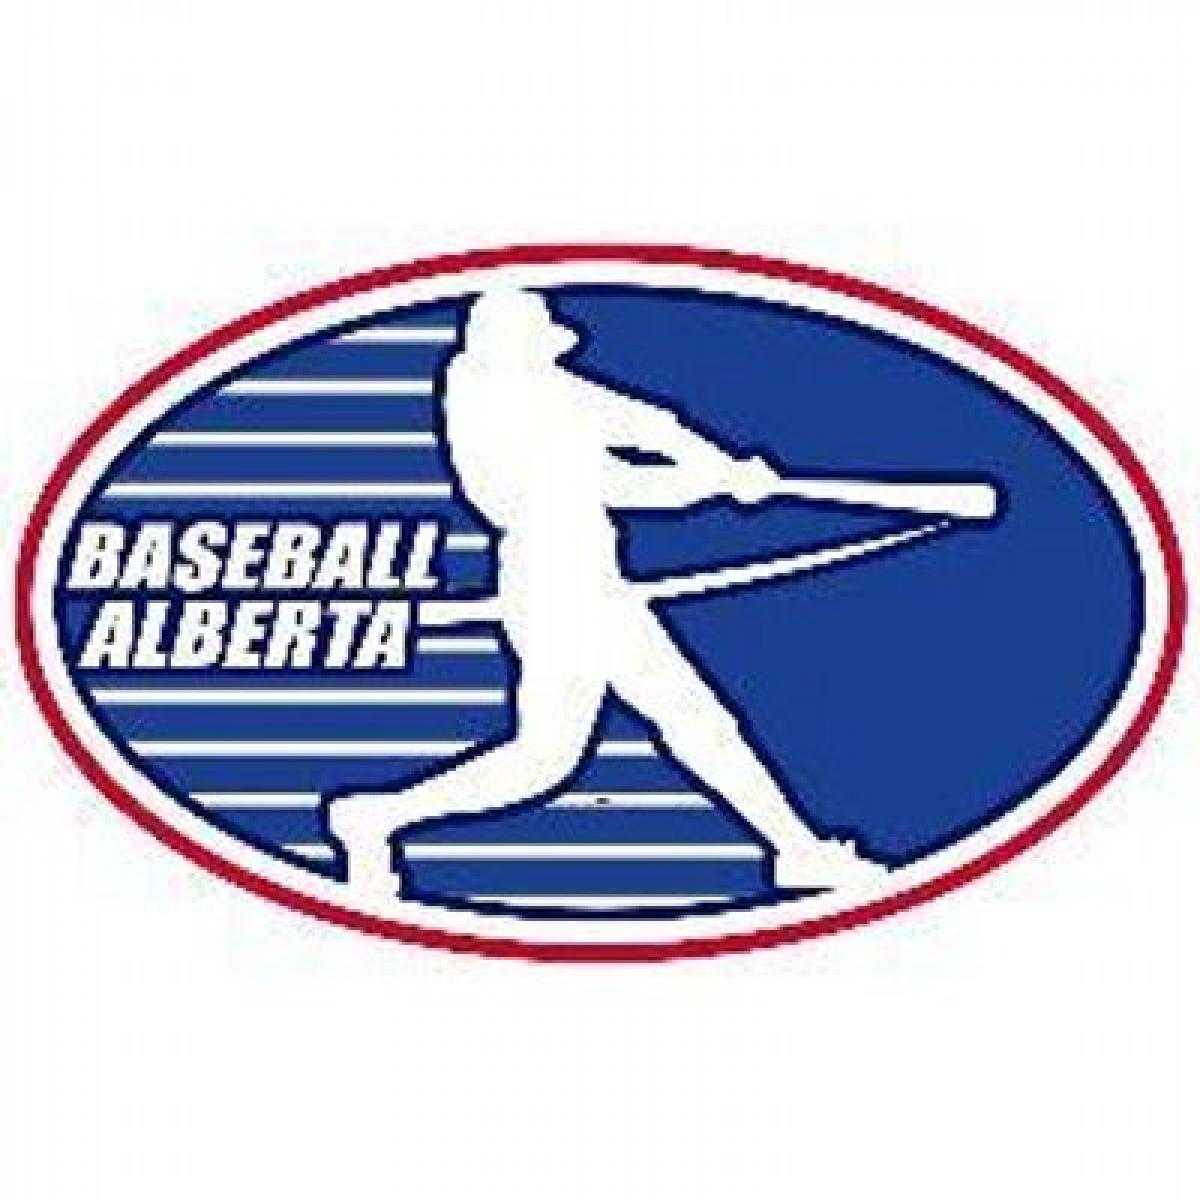 Baseball Alberta confirms fees for 2011